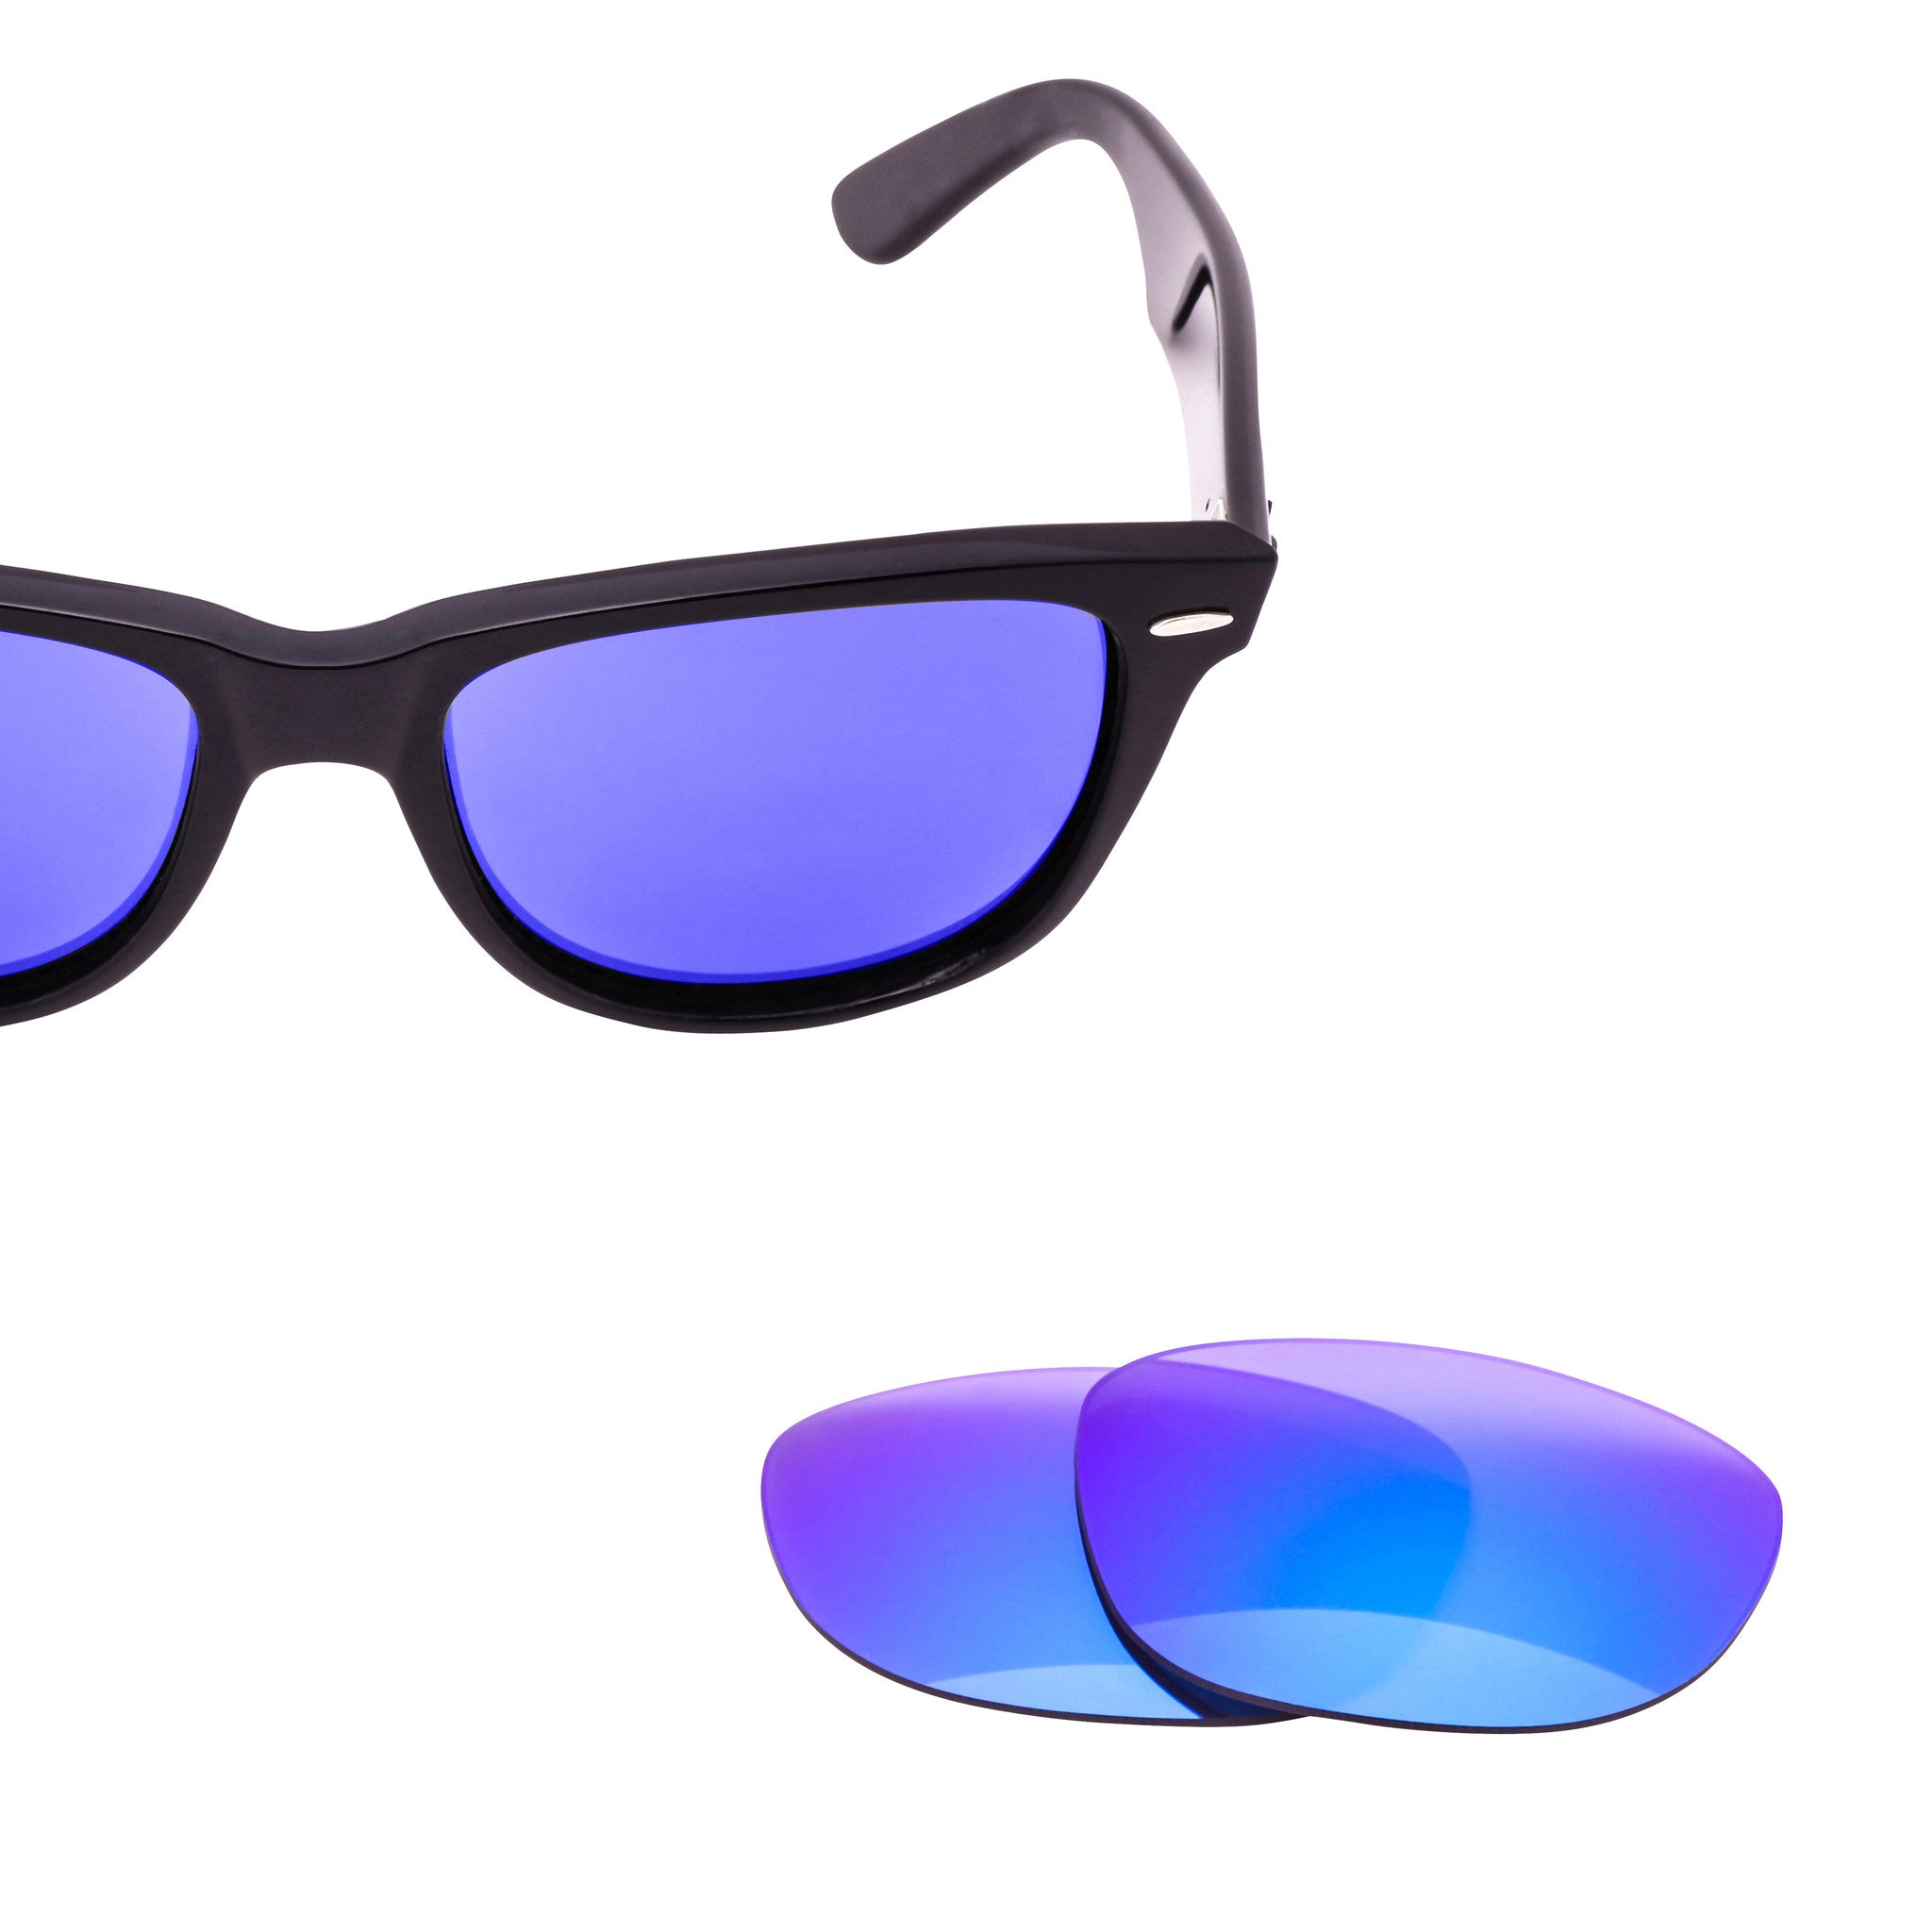 ORIGINAL WAYFARER CLASSIC Sunglasses in Black and Green - RB2140 | Ray-Ban®  US